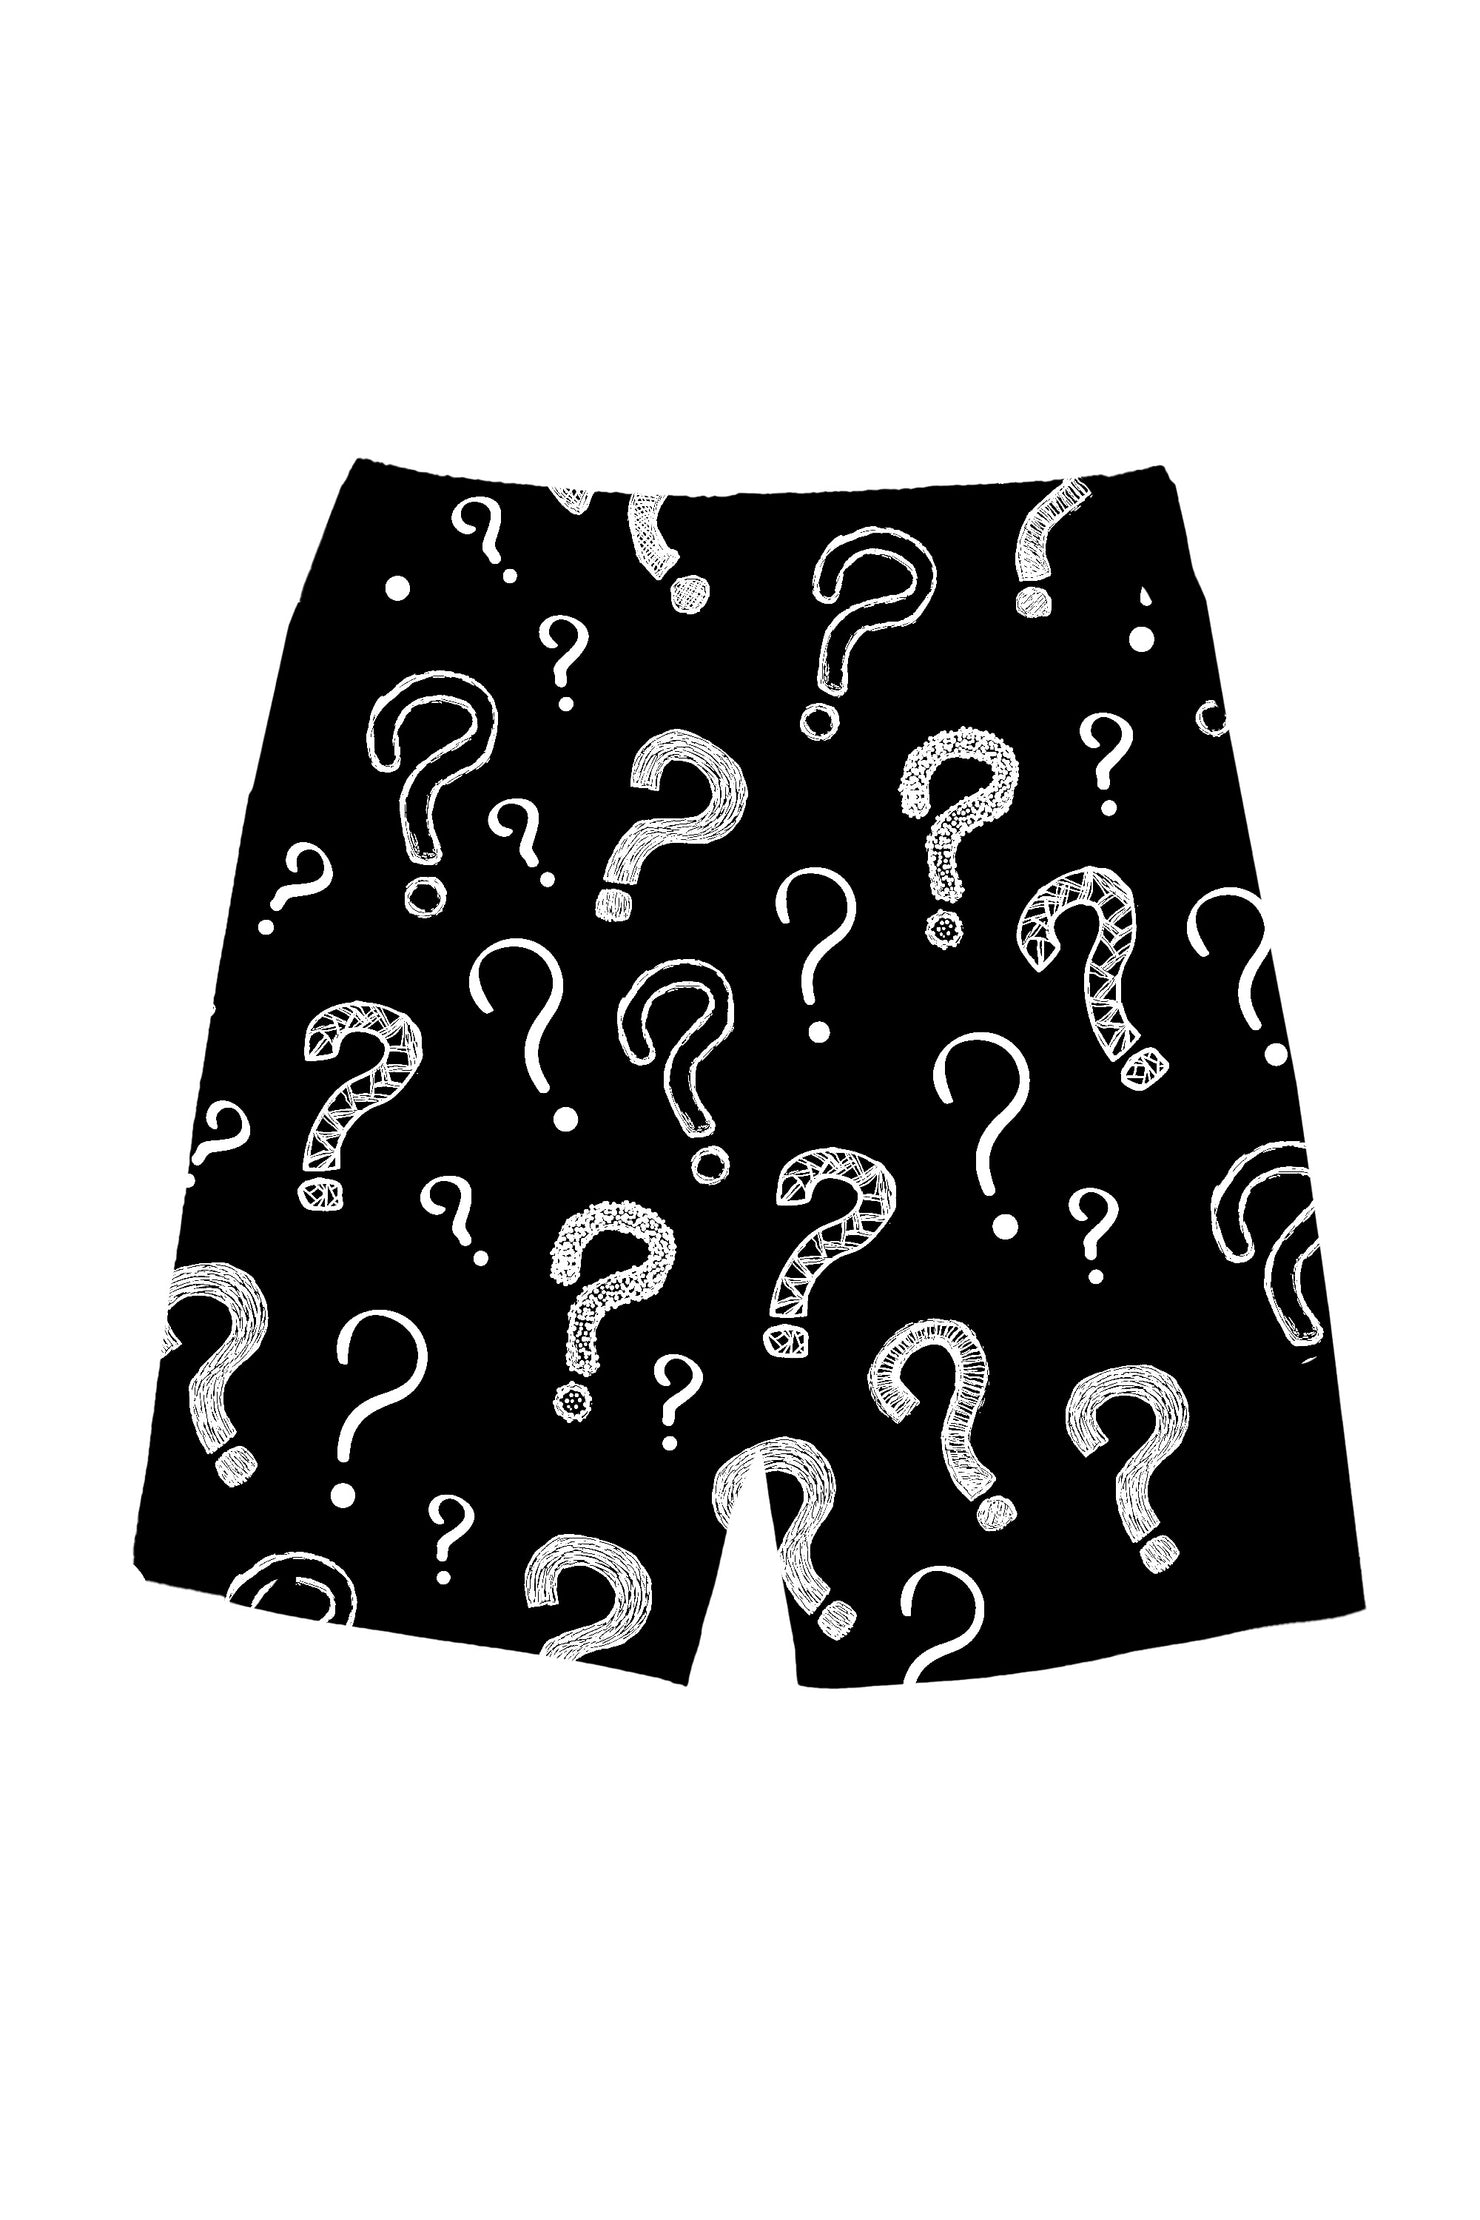 Boys Mystery Shorts